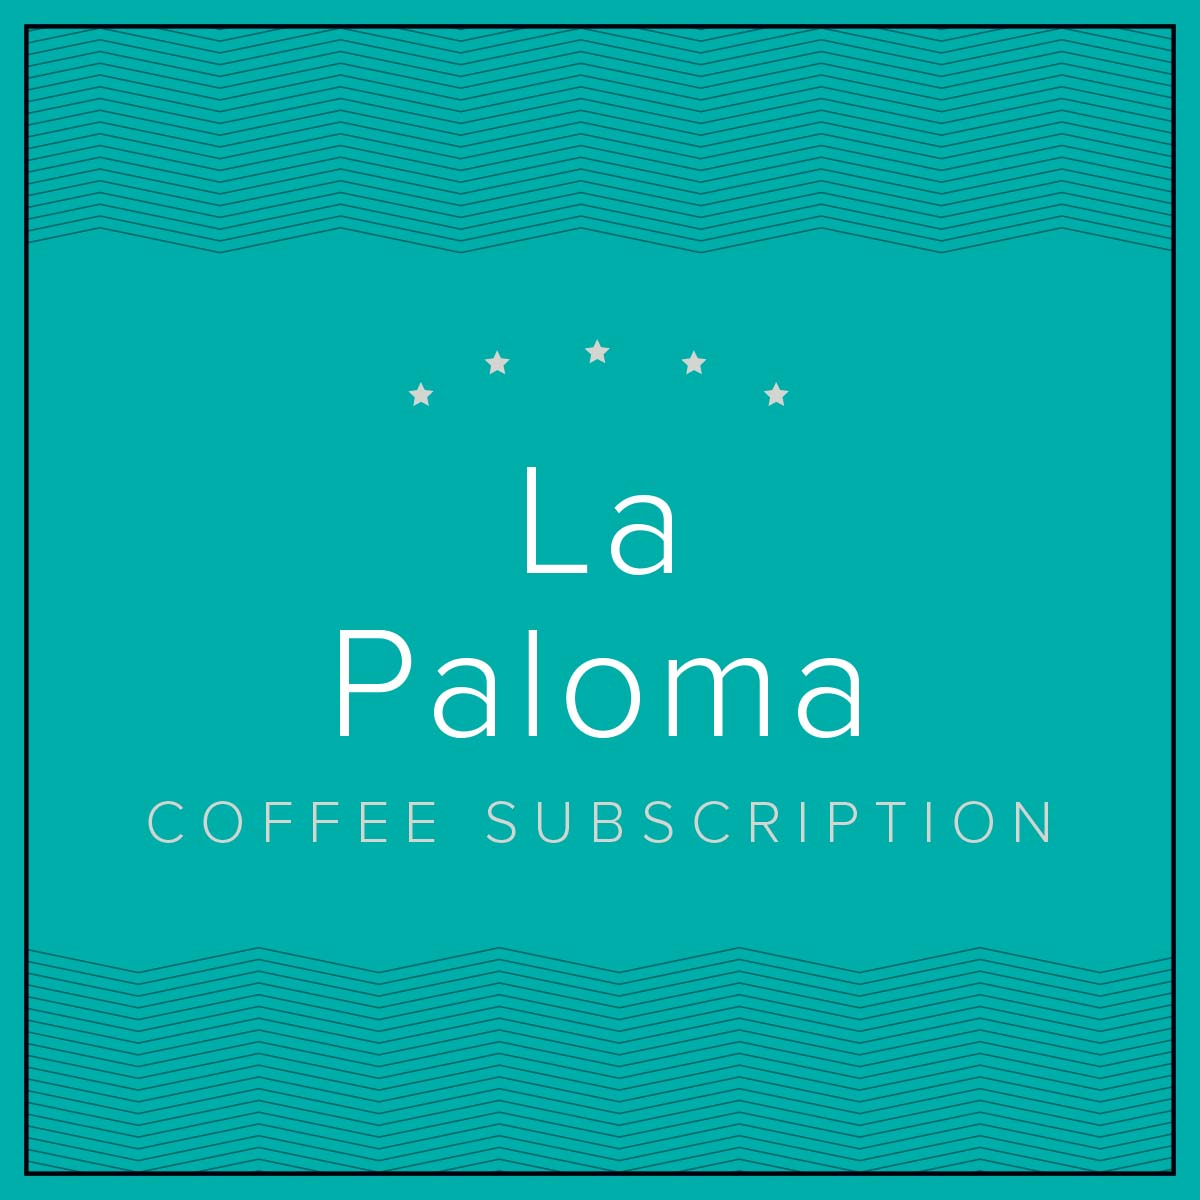 La Paloma Subscription